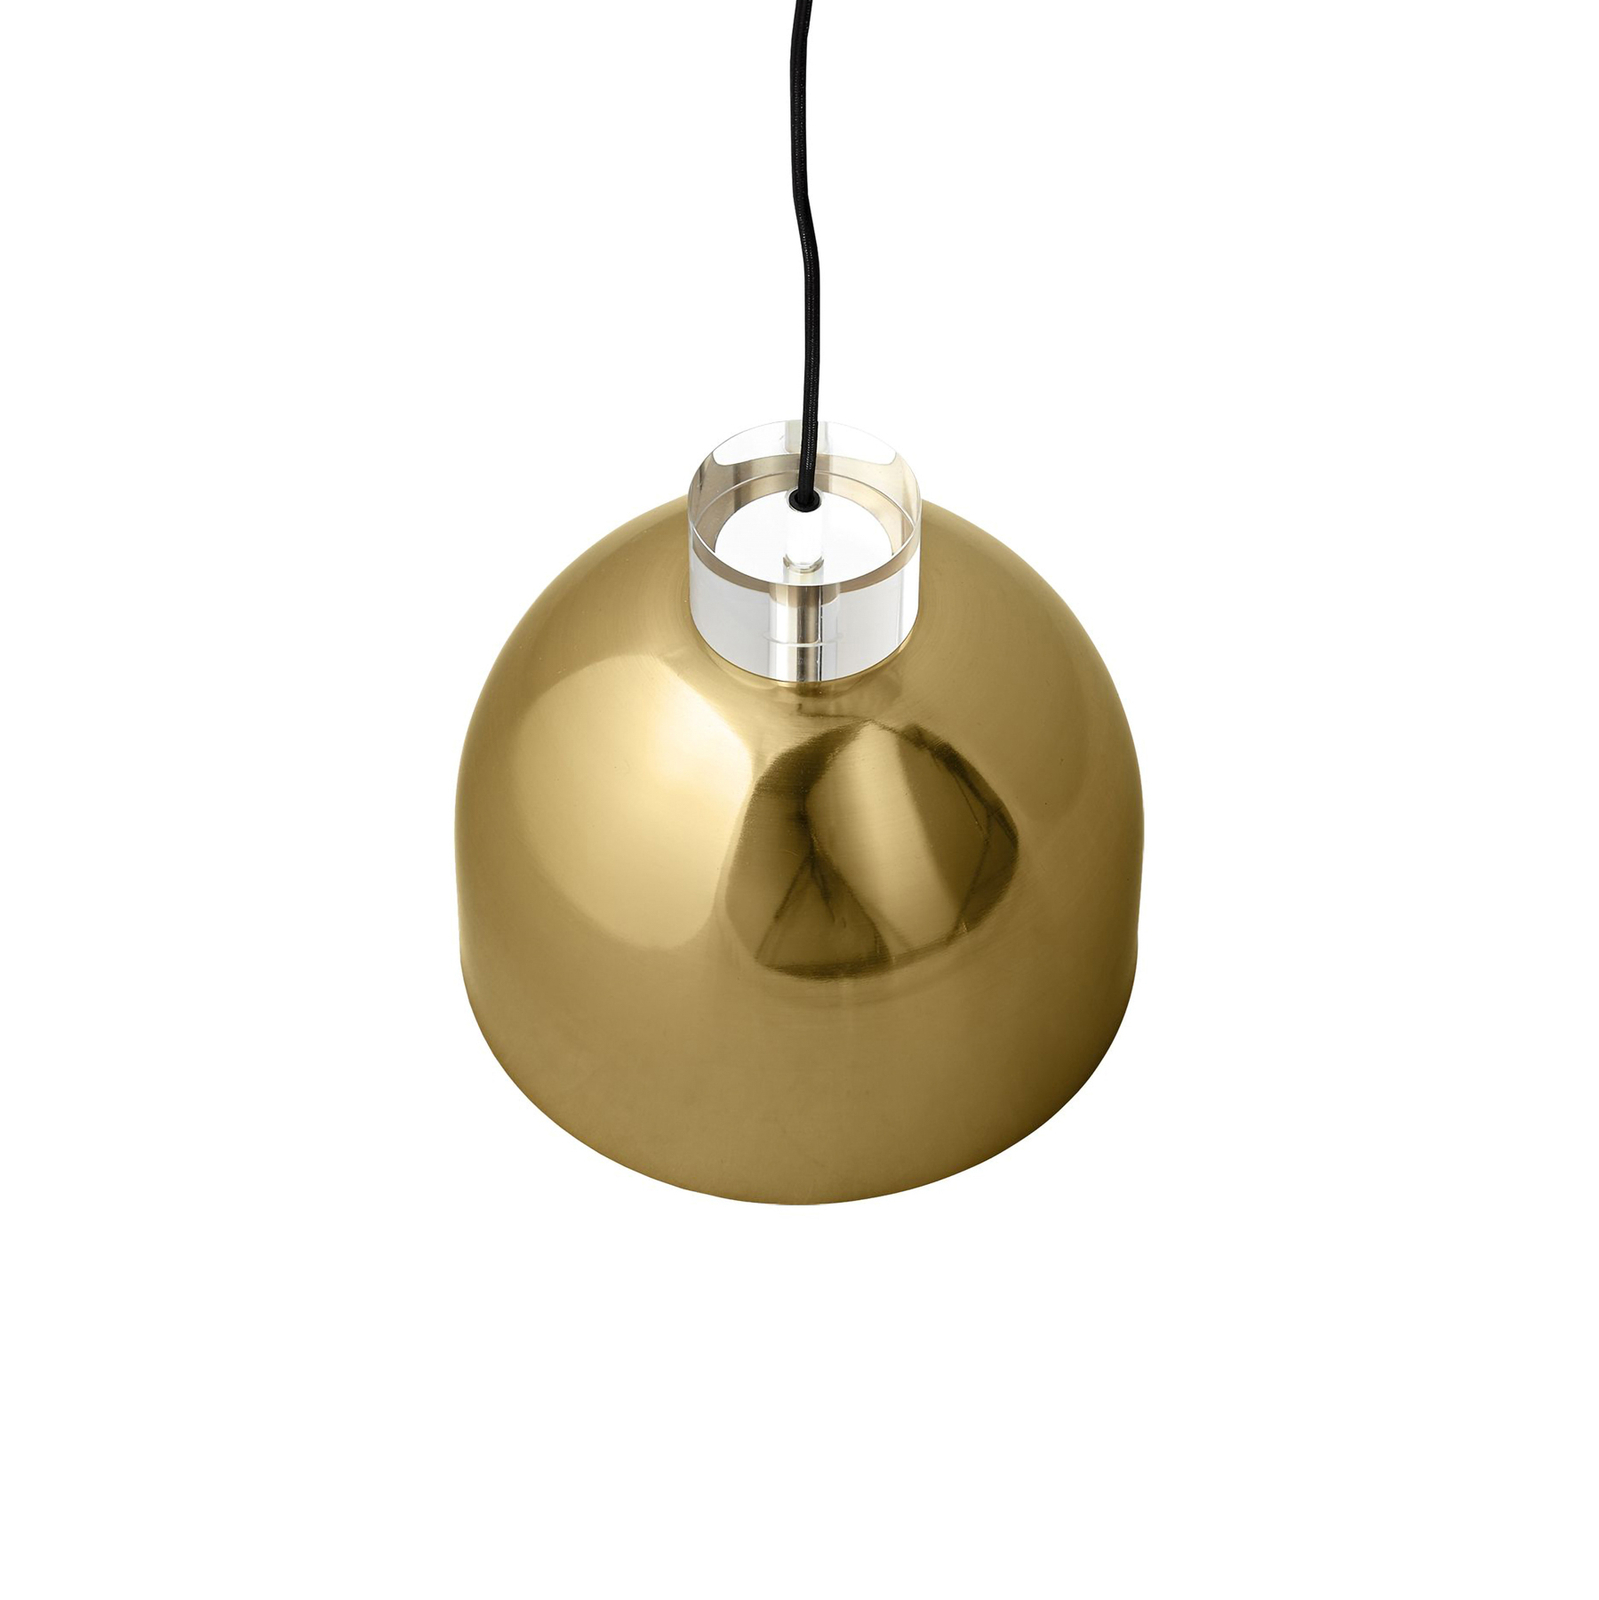 AYTM Luceo hanglamp, rond, goud, Ø 28 cm